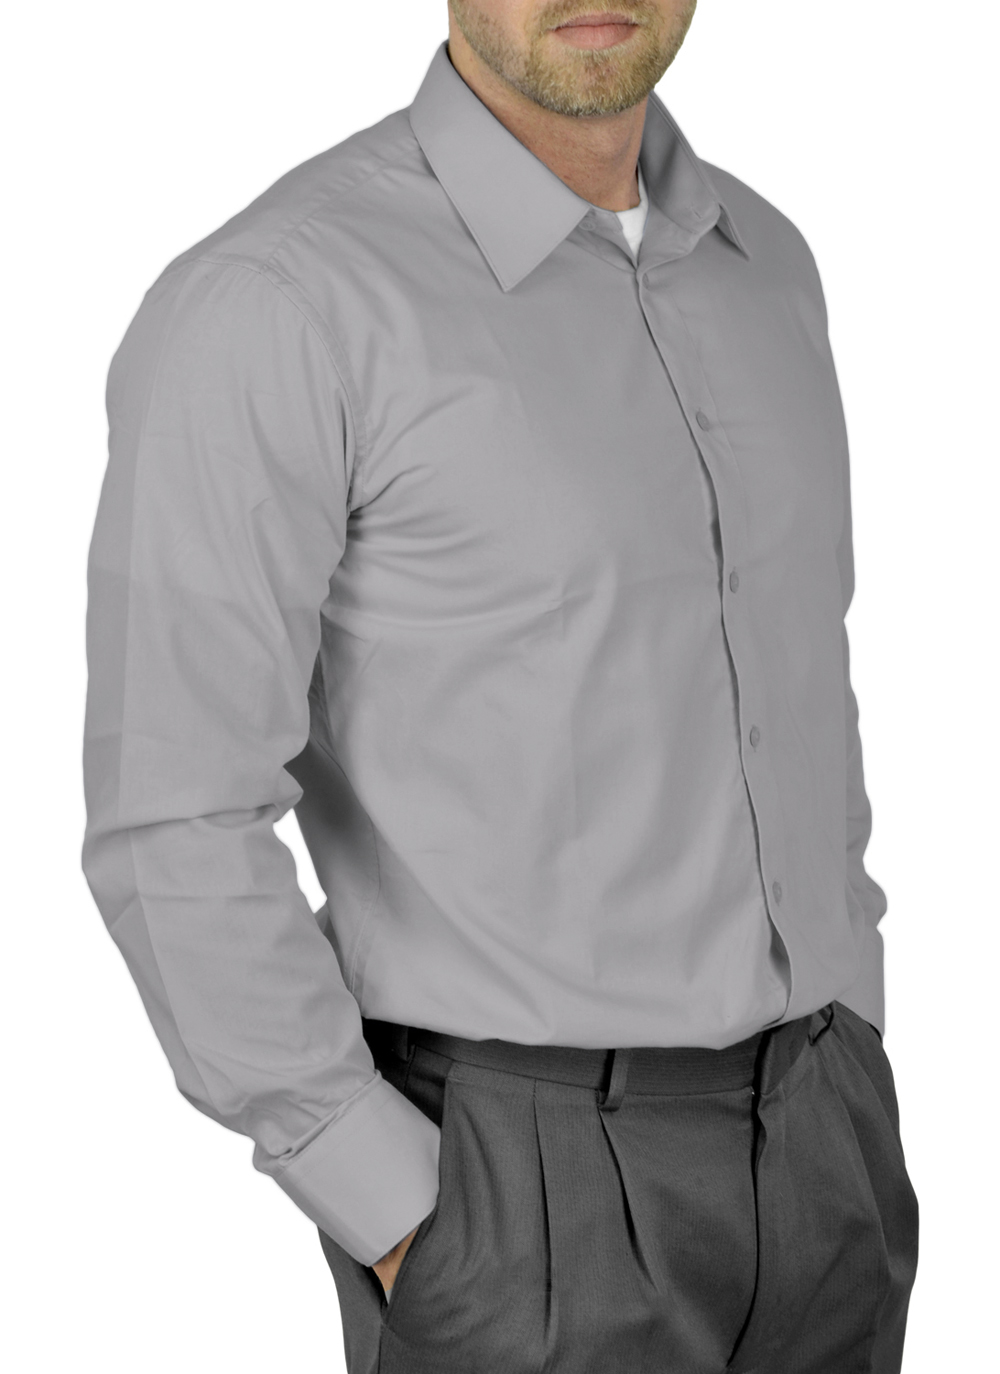 Moda Di Raza Mens Dress Shirt, French Cuff Shirt, Slim and Regular Fit, Dress Shirt For Men, Cufflink Shirts For Men - Silver-SlimFit 14.5" Neck 32/33" Sleeve